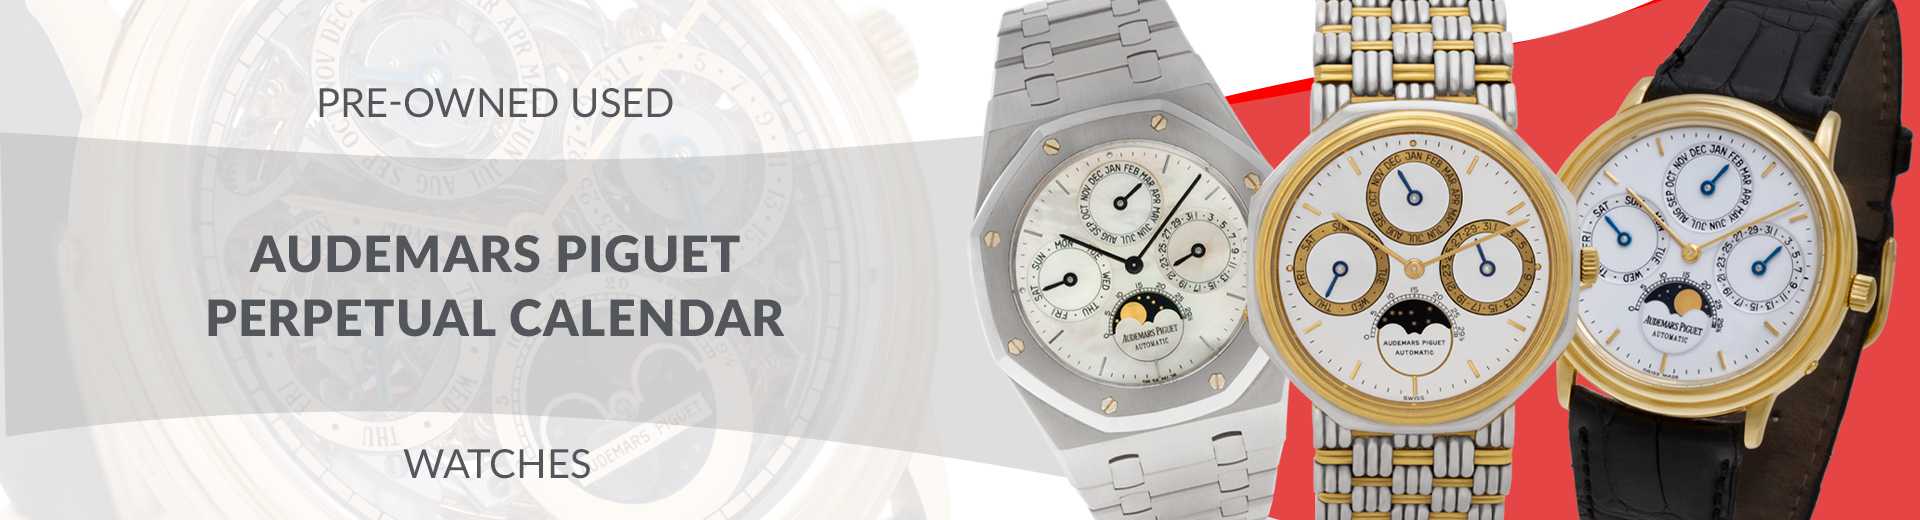 Pre-Owned Certified Used Audemars Piguet Perpetual Watches Header